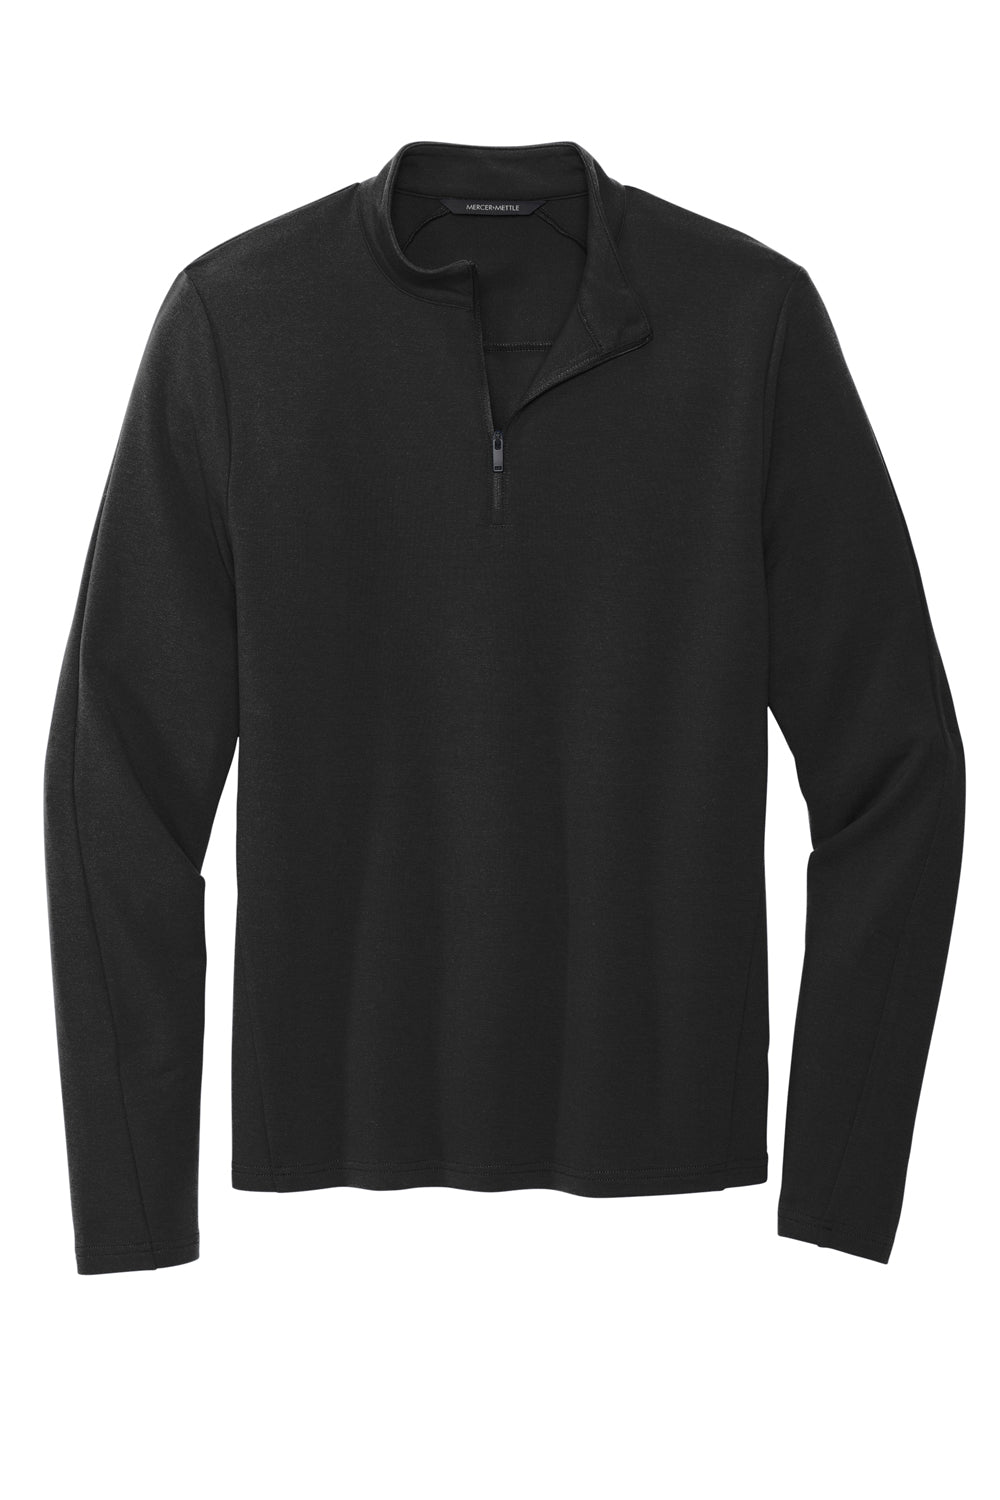 Mercer+Mettle MM3010 Stretch 1/4 Zip Sweatshirt Deep Black Flat Front